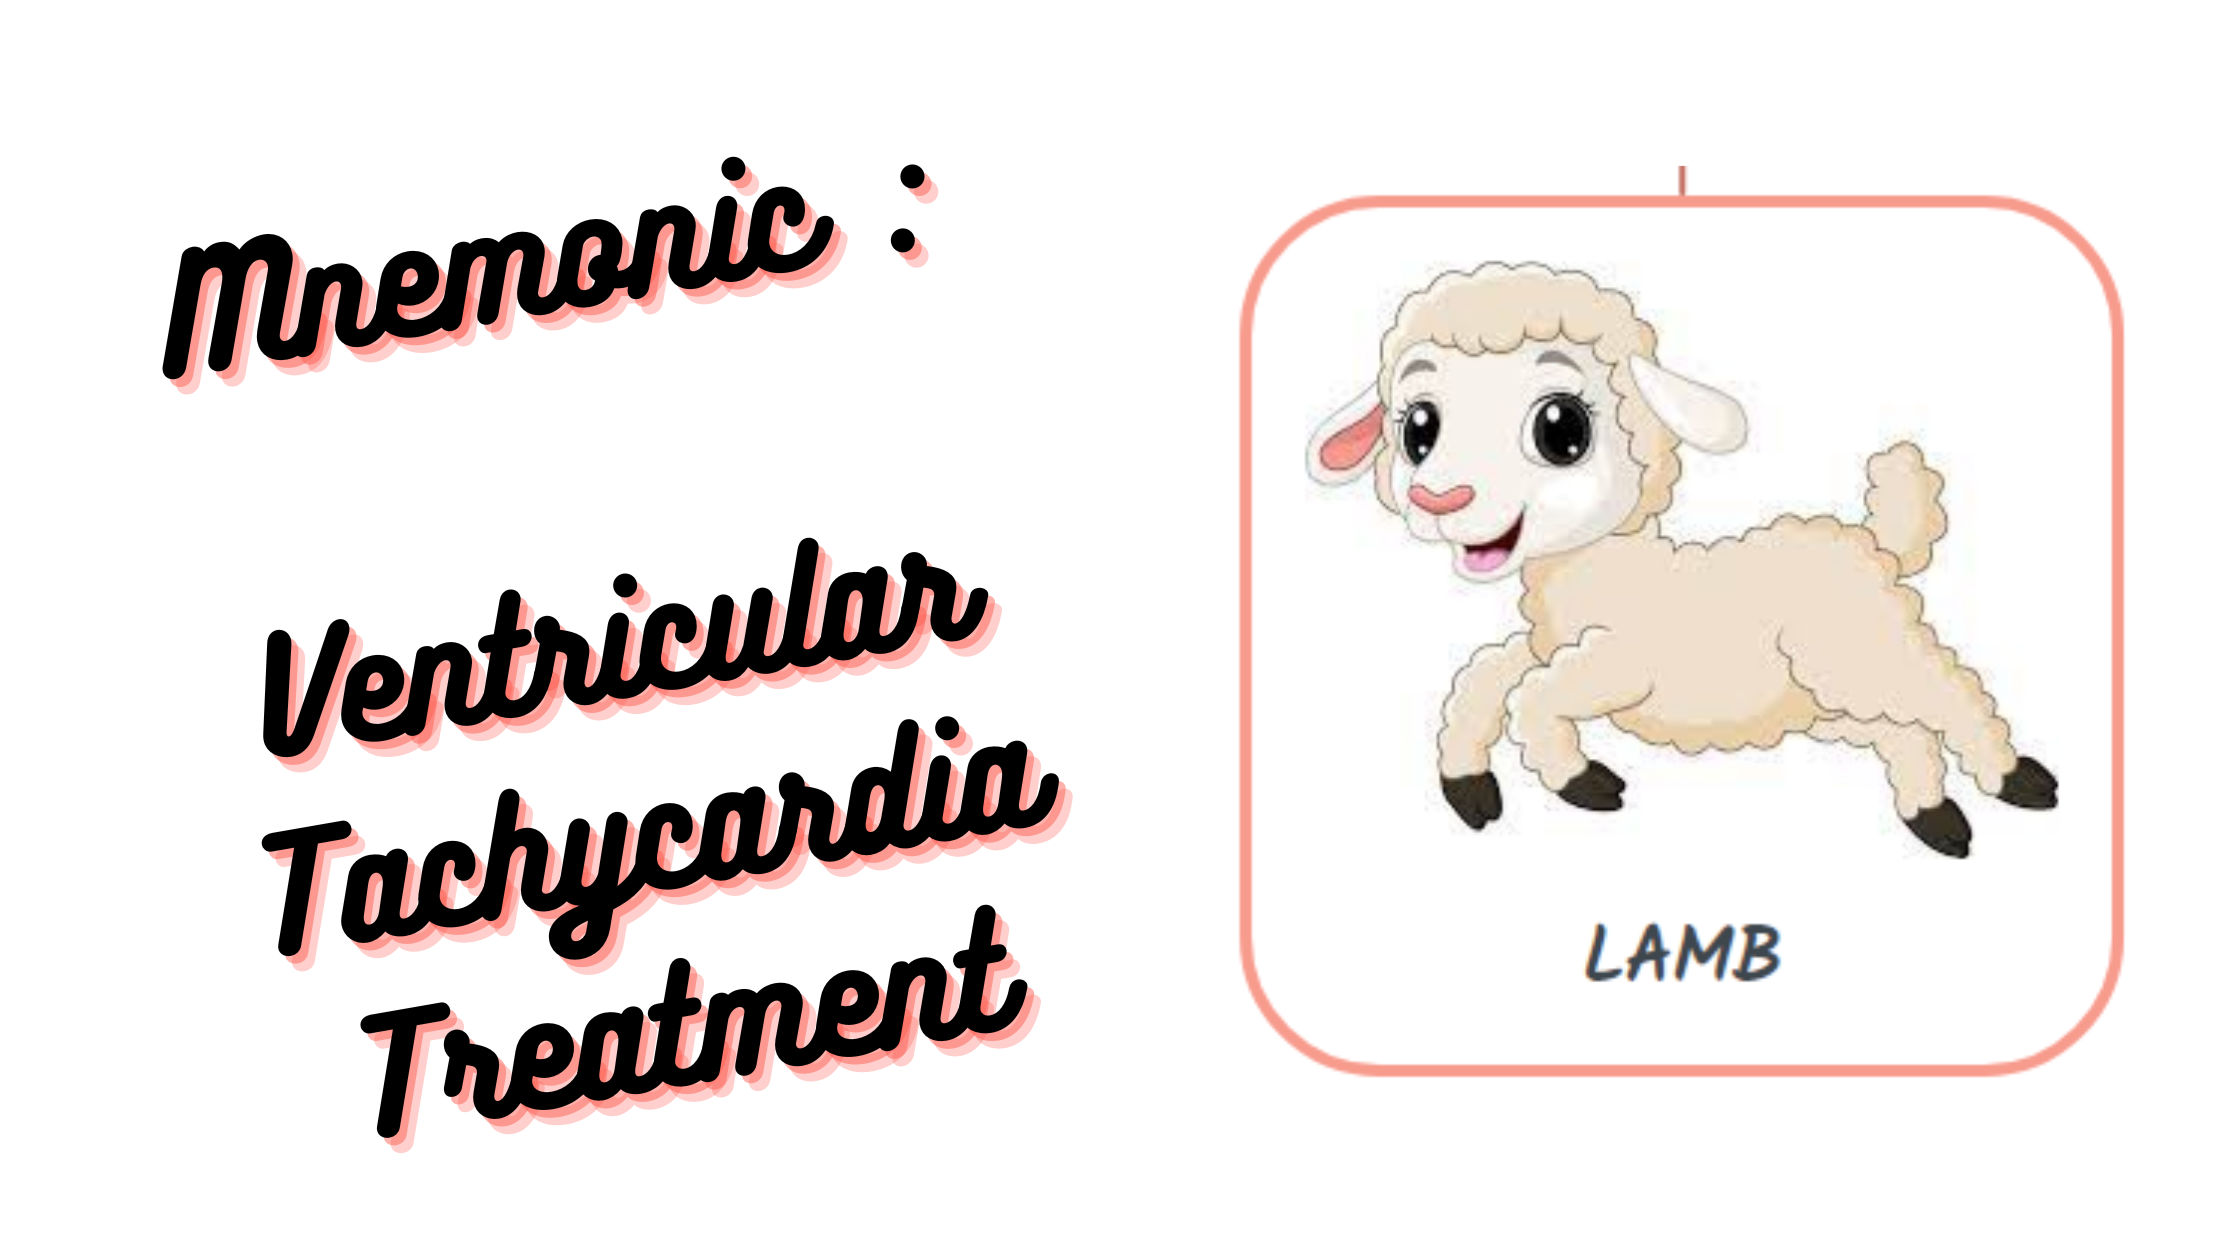 Mnemonic _ Ventricular Tachycardia Treatment